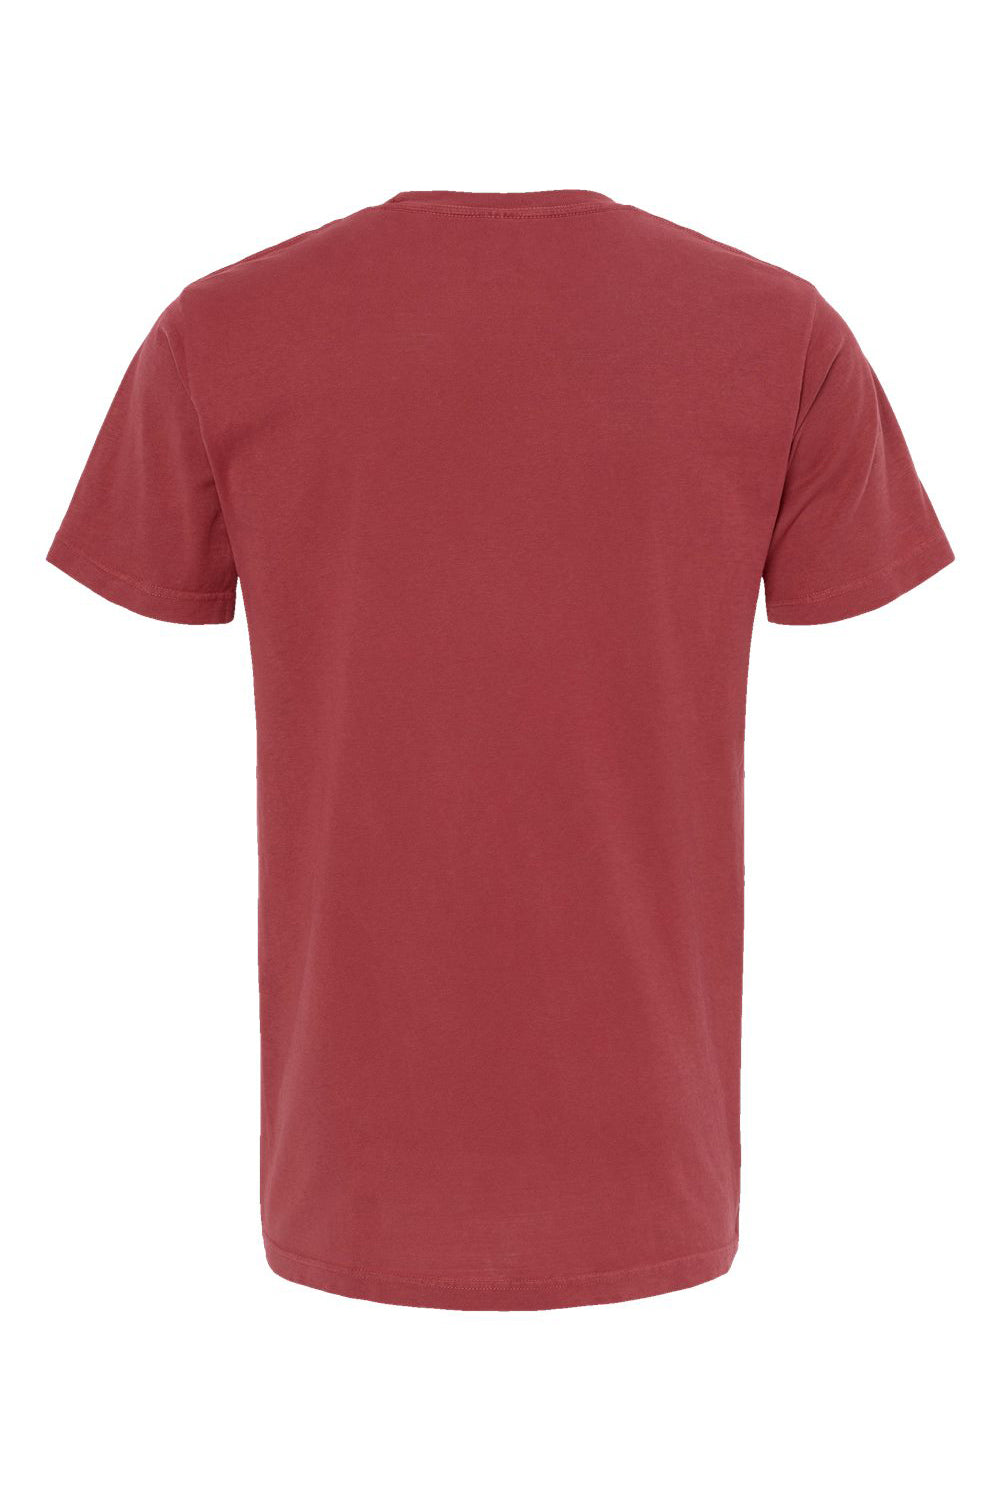 M&O 6500M Mens Vintage Garment Dyed Short Sleeve Crewneck T-Shirt Crimson Red Flat Back